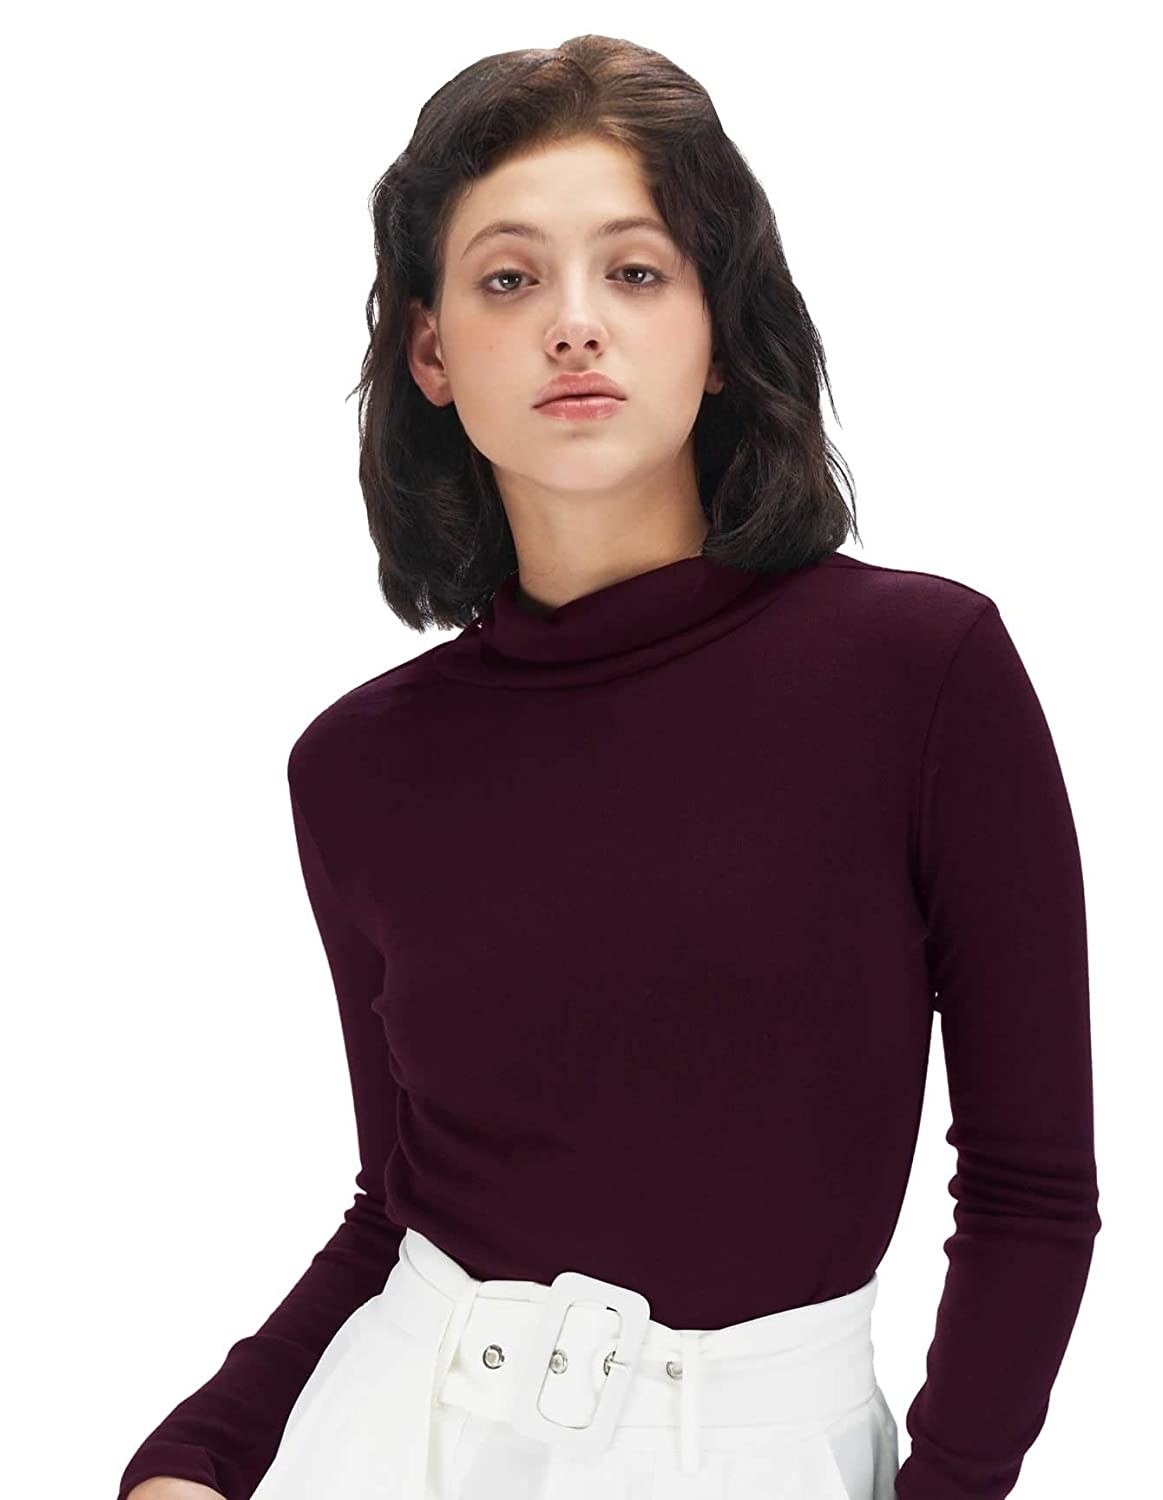 A woman wearing full sleeve turtleneck top